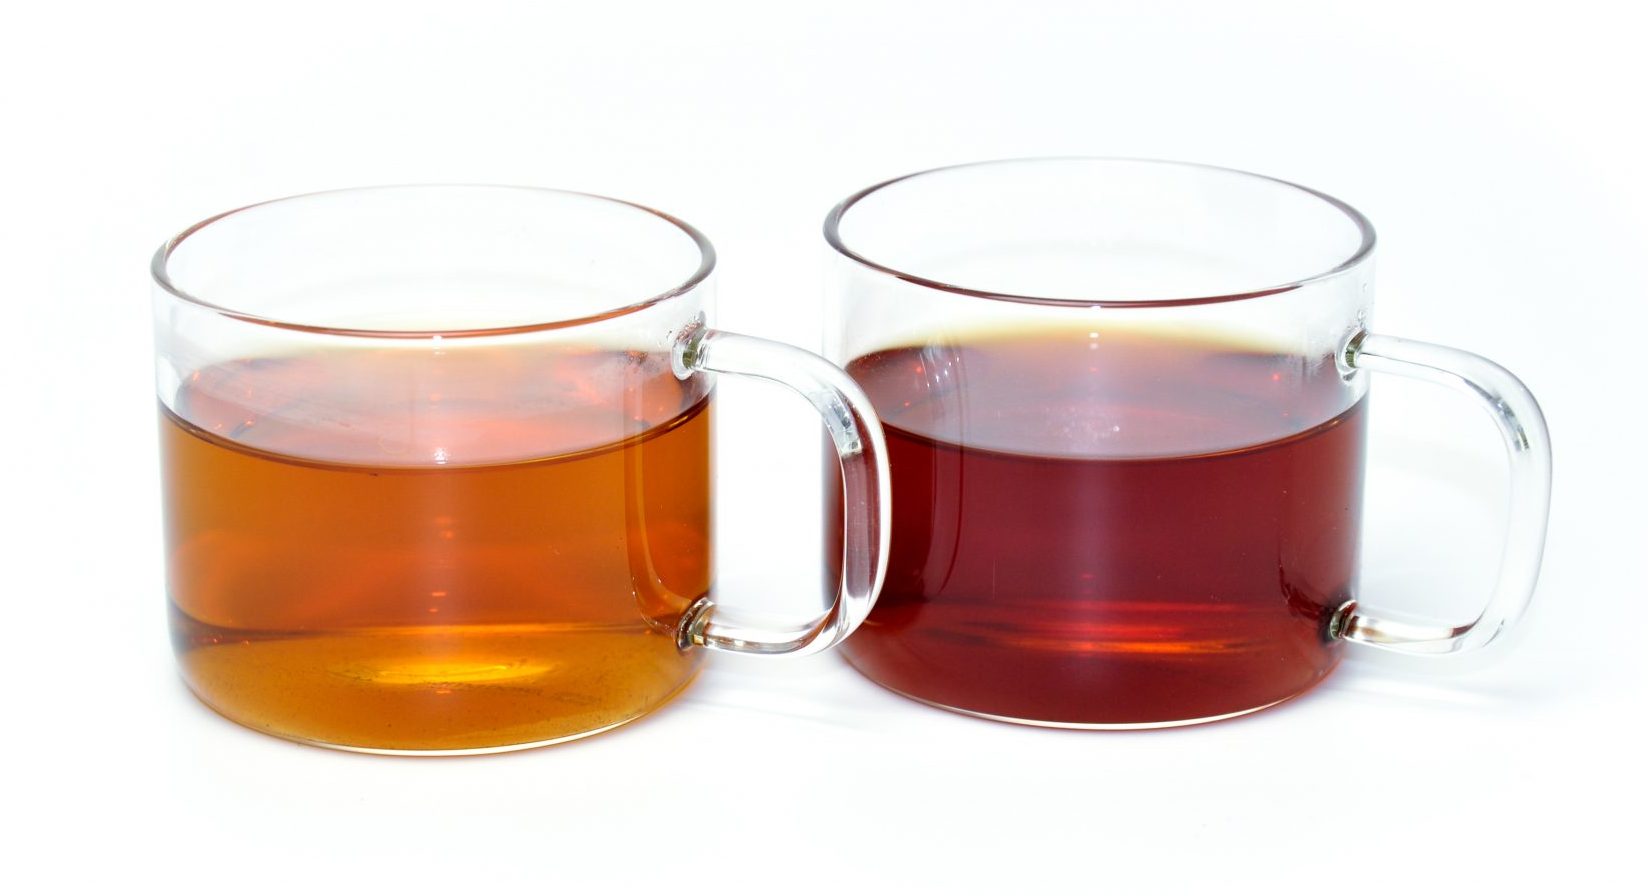 Samadoyo Glass Tea Cups (set of 2)